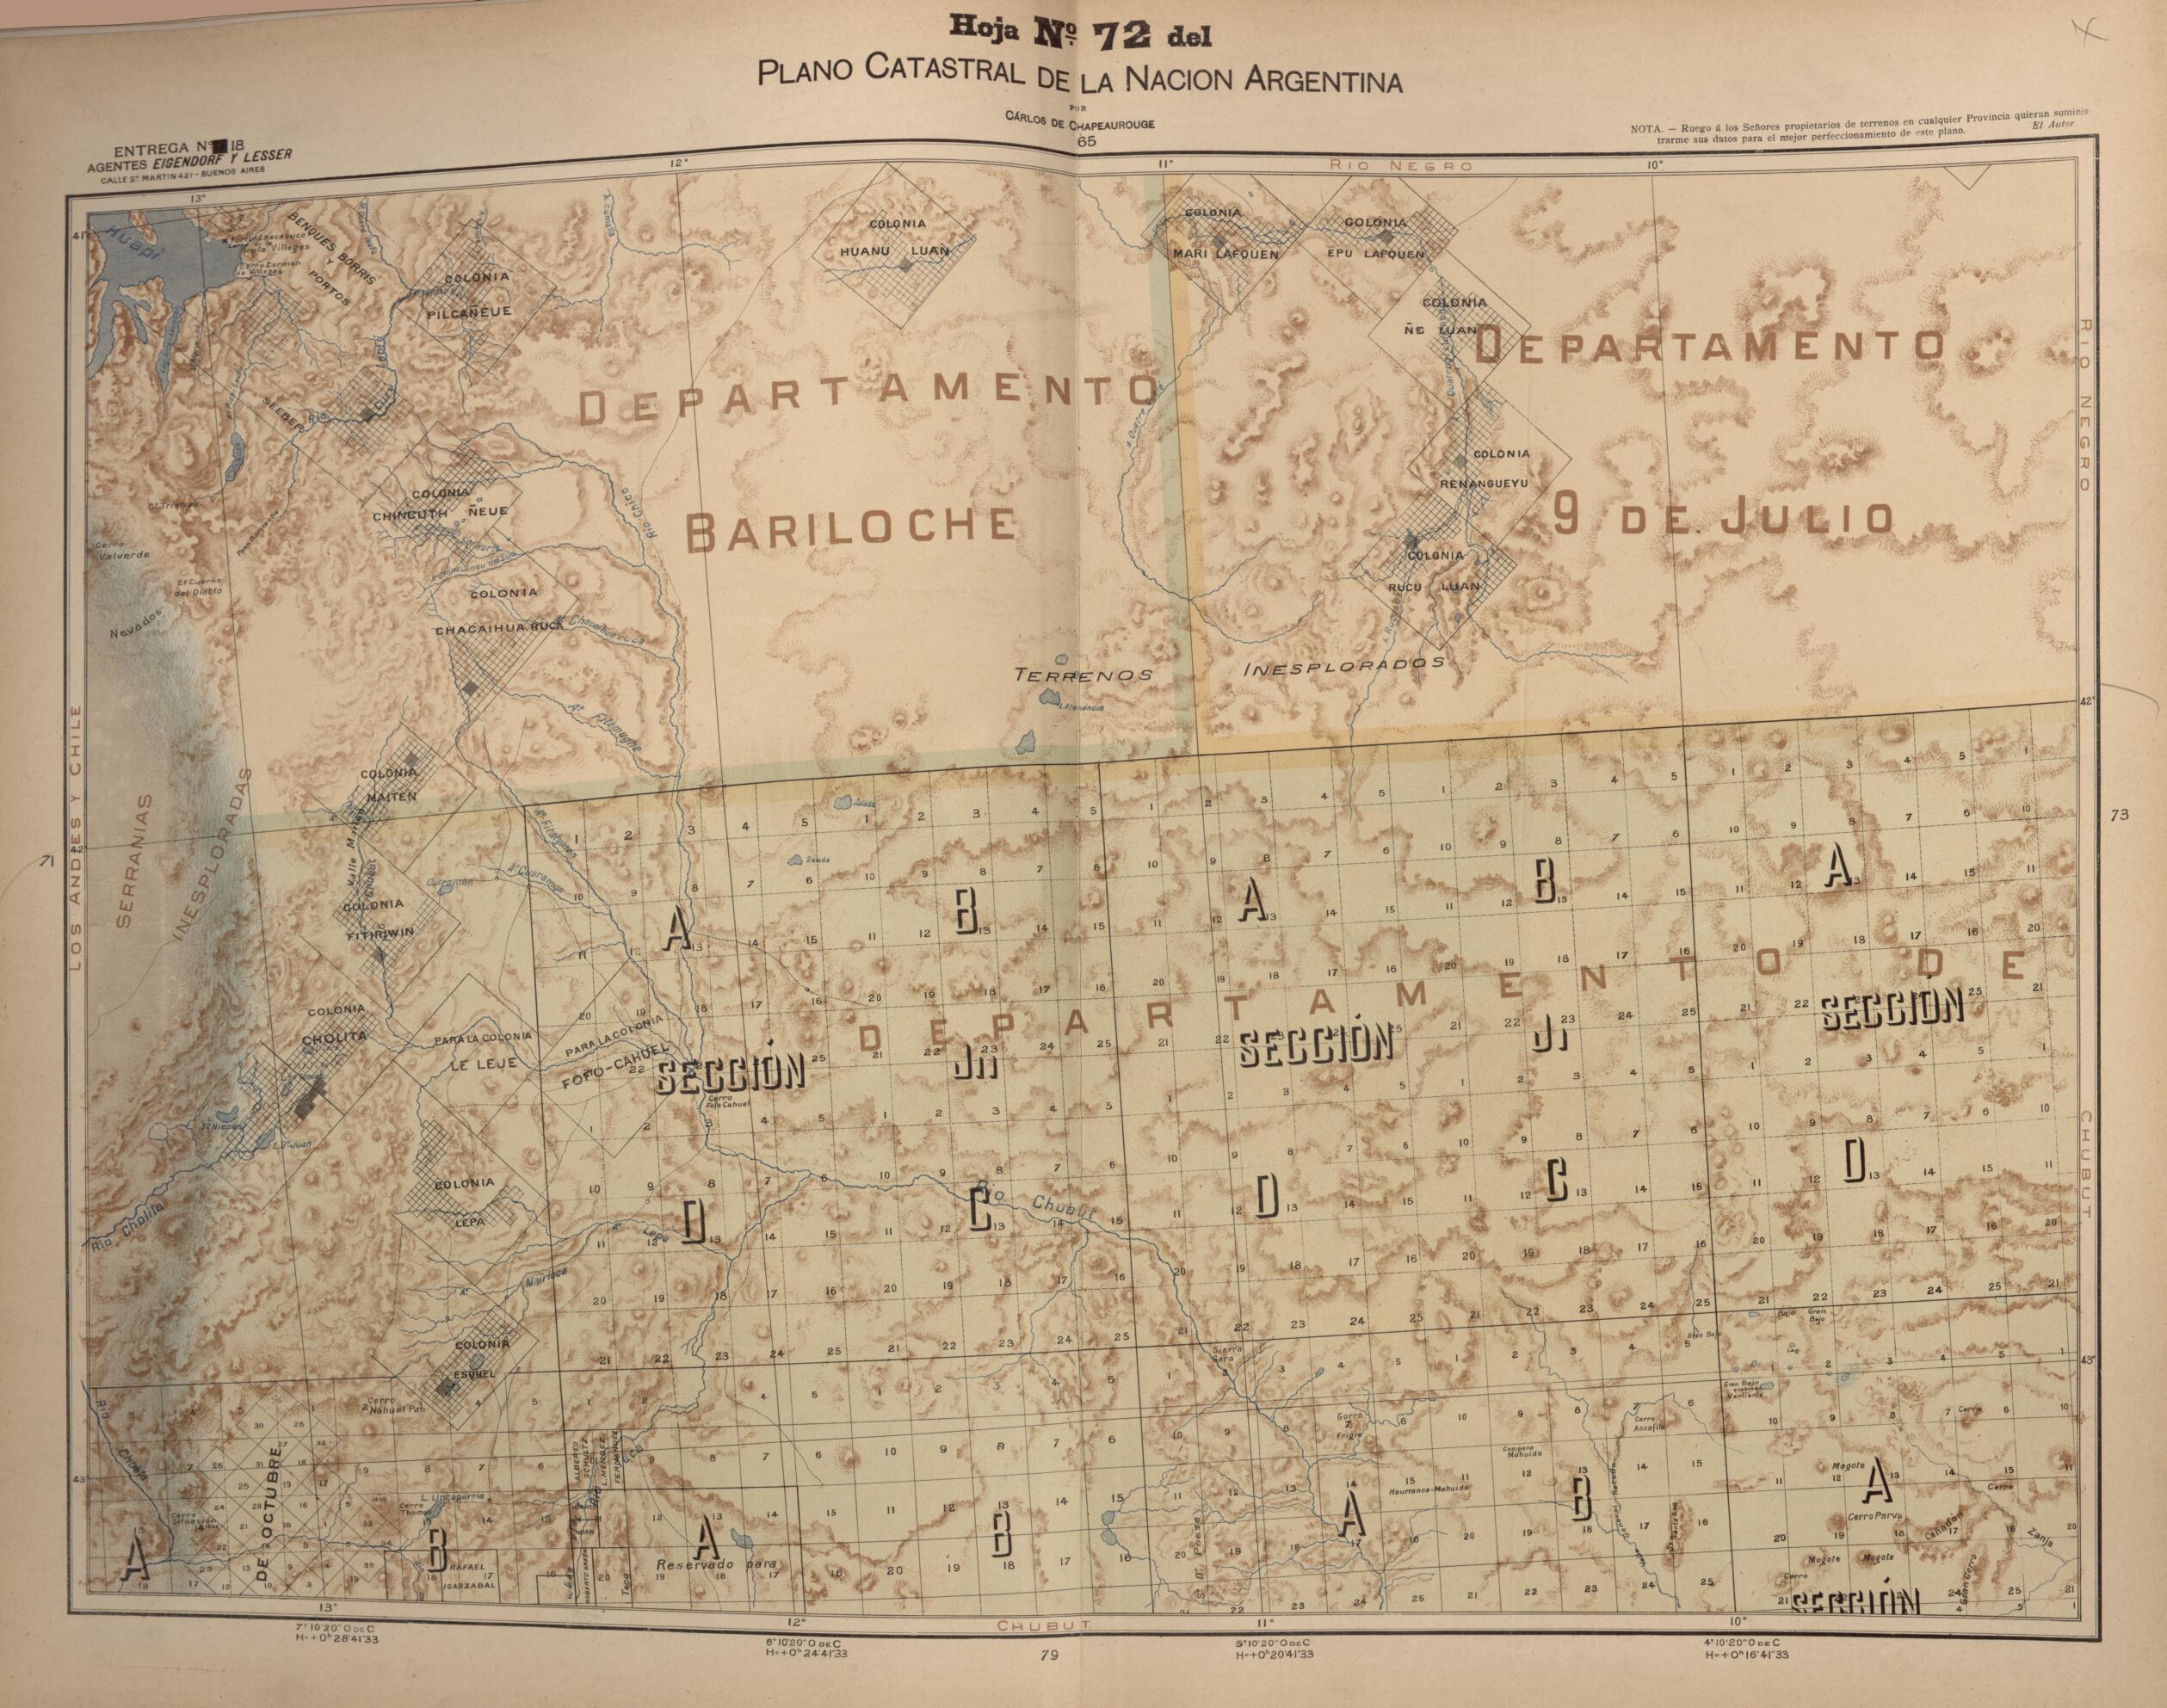 This old map of Plano Catastral De La Nacion Hoja No. 72 from República Argentina from 1905 was created by Carlos De Chapeaurouge in 1905